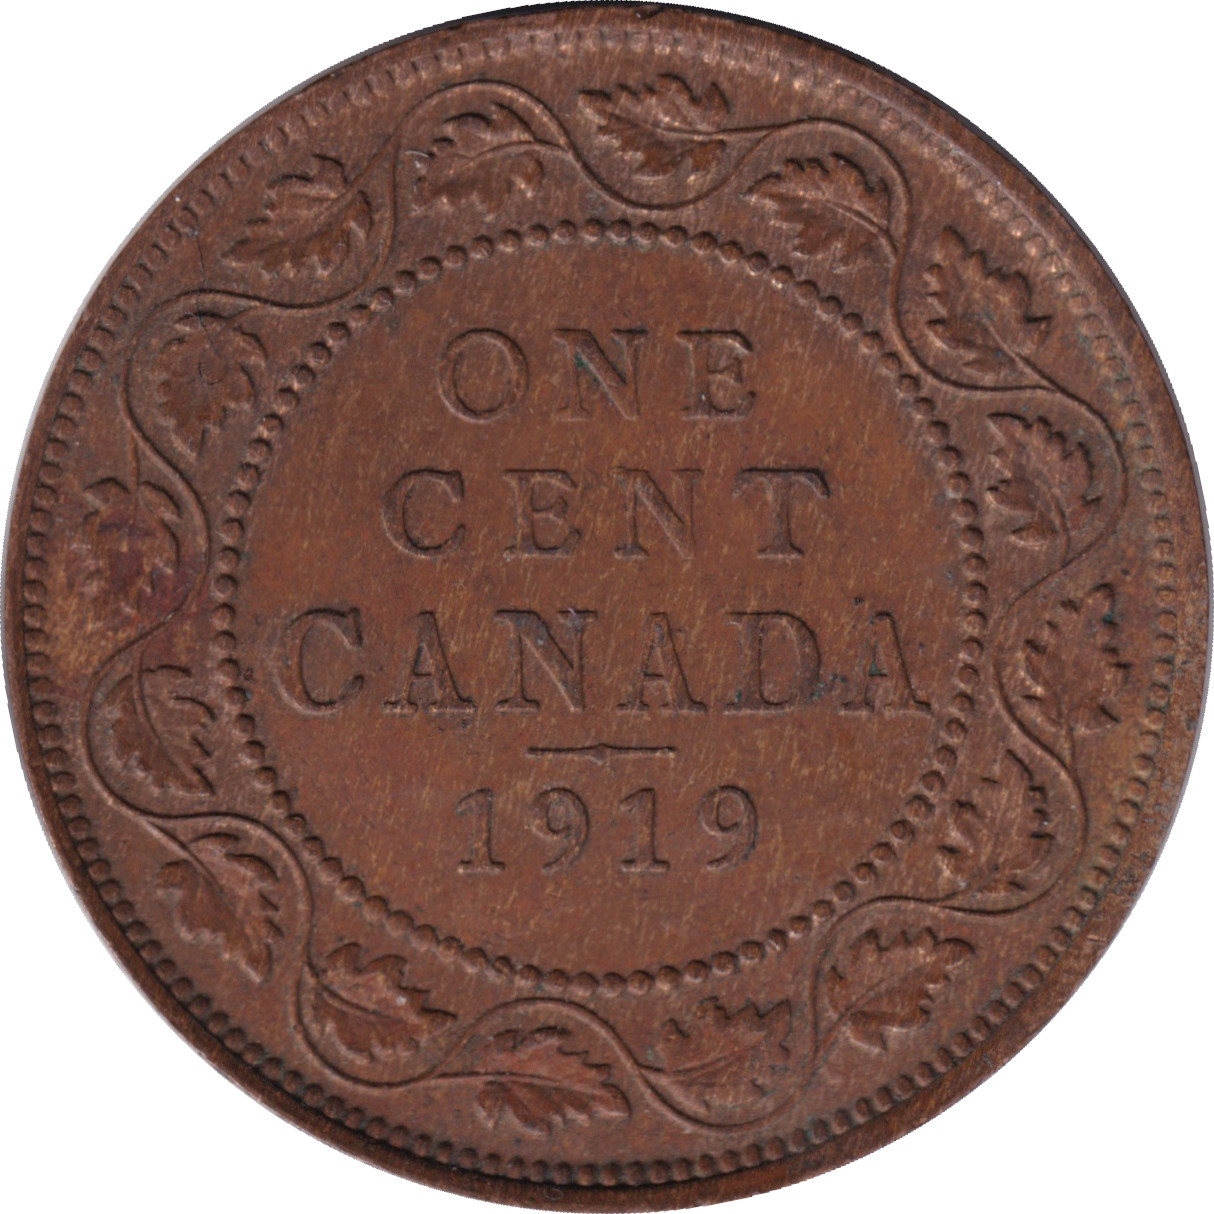 1 cent - George V - Grand type